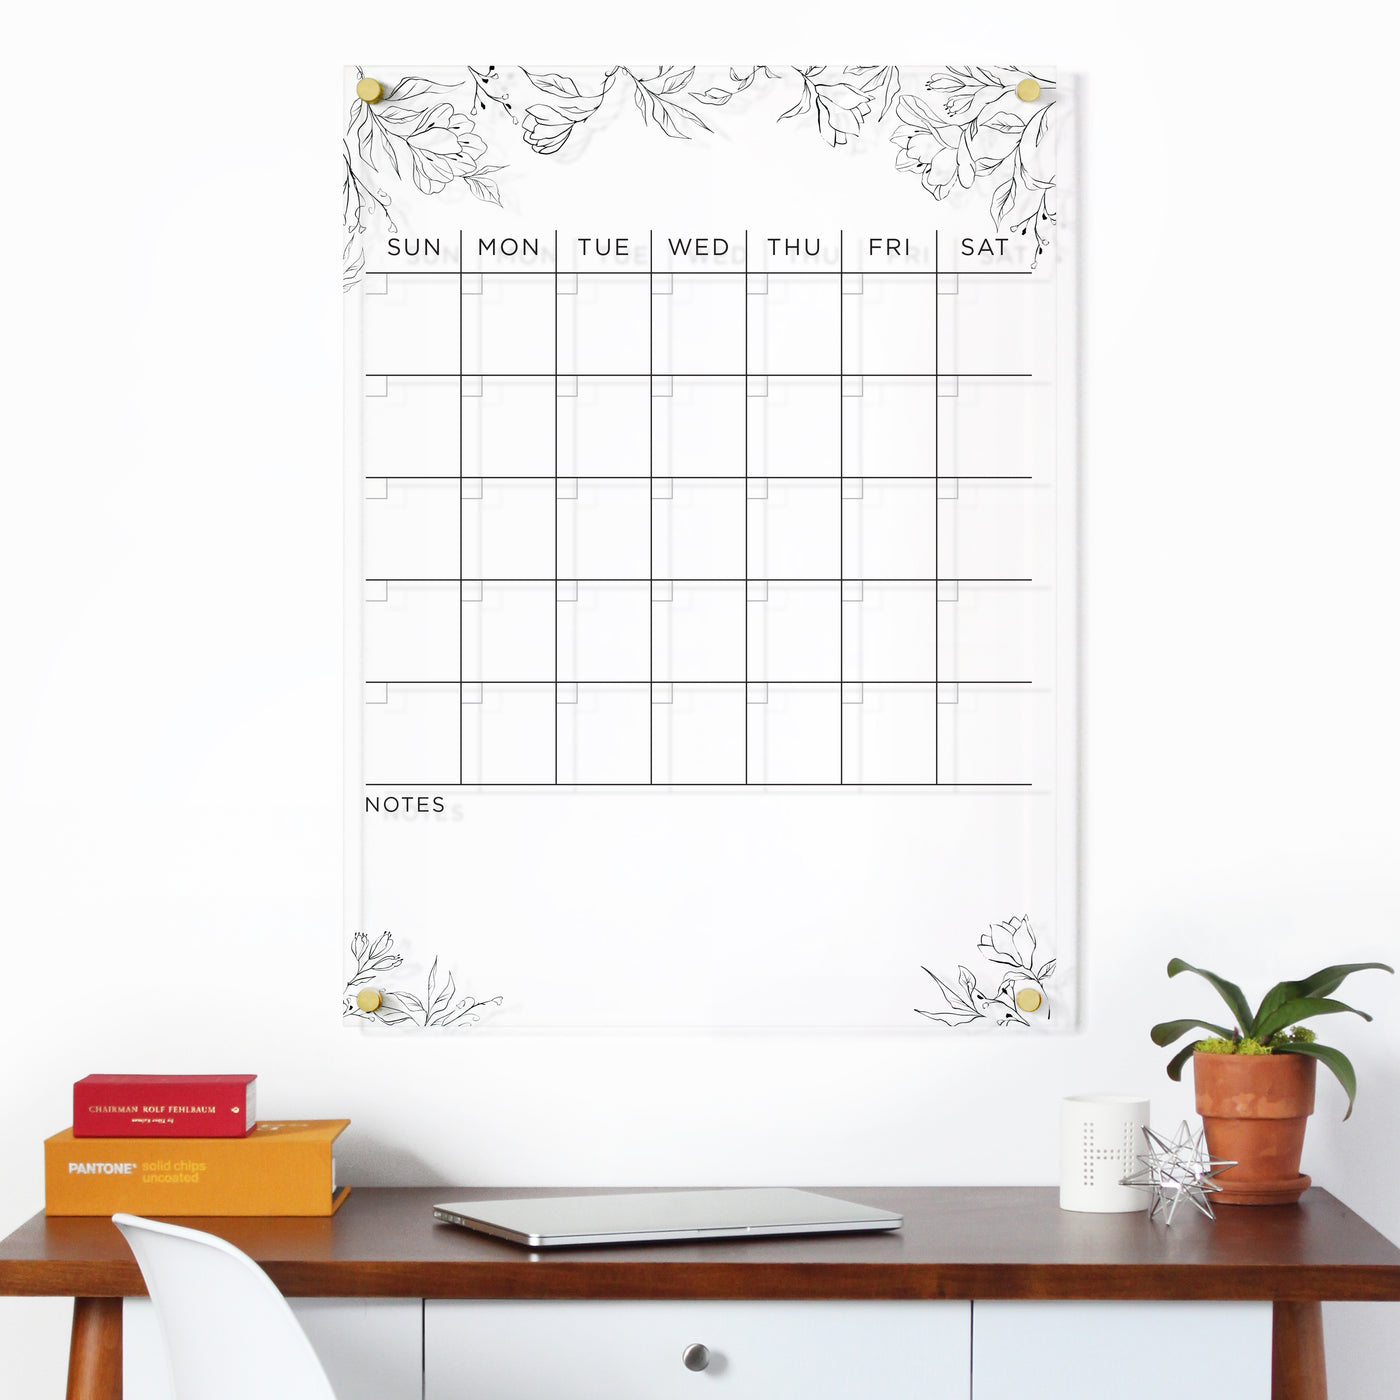 Acrylic Calendar with floral design